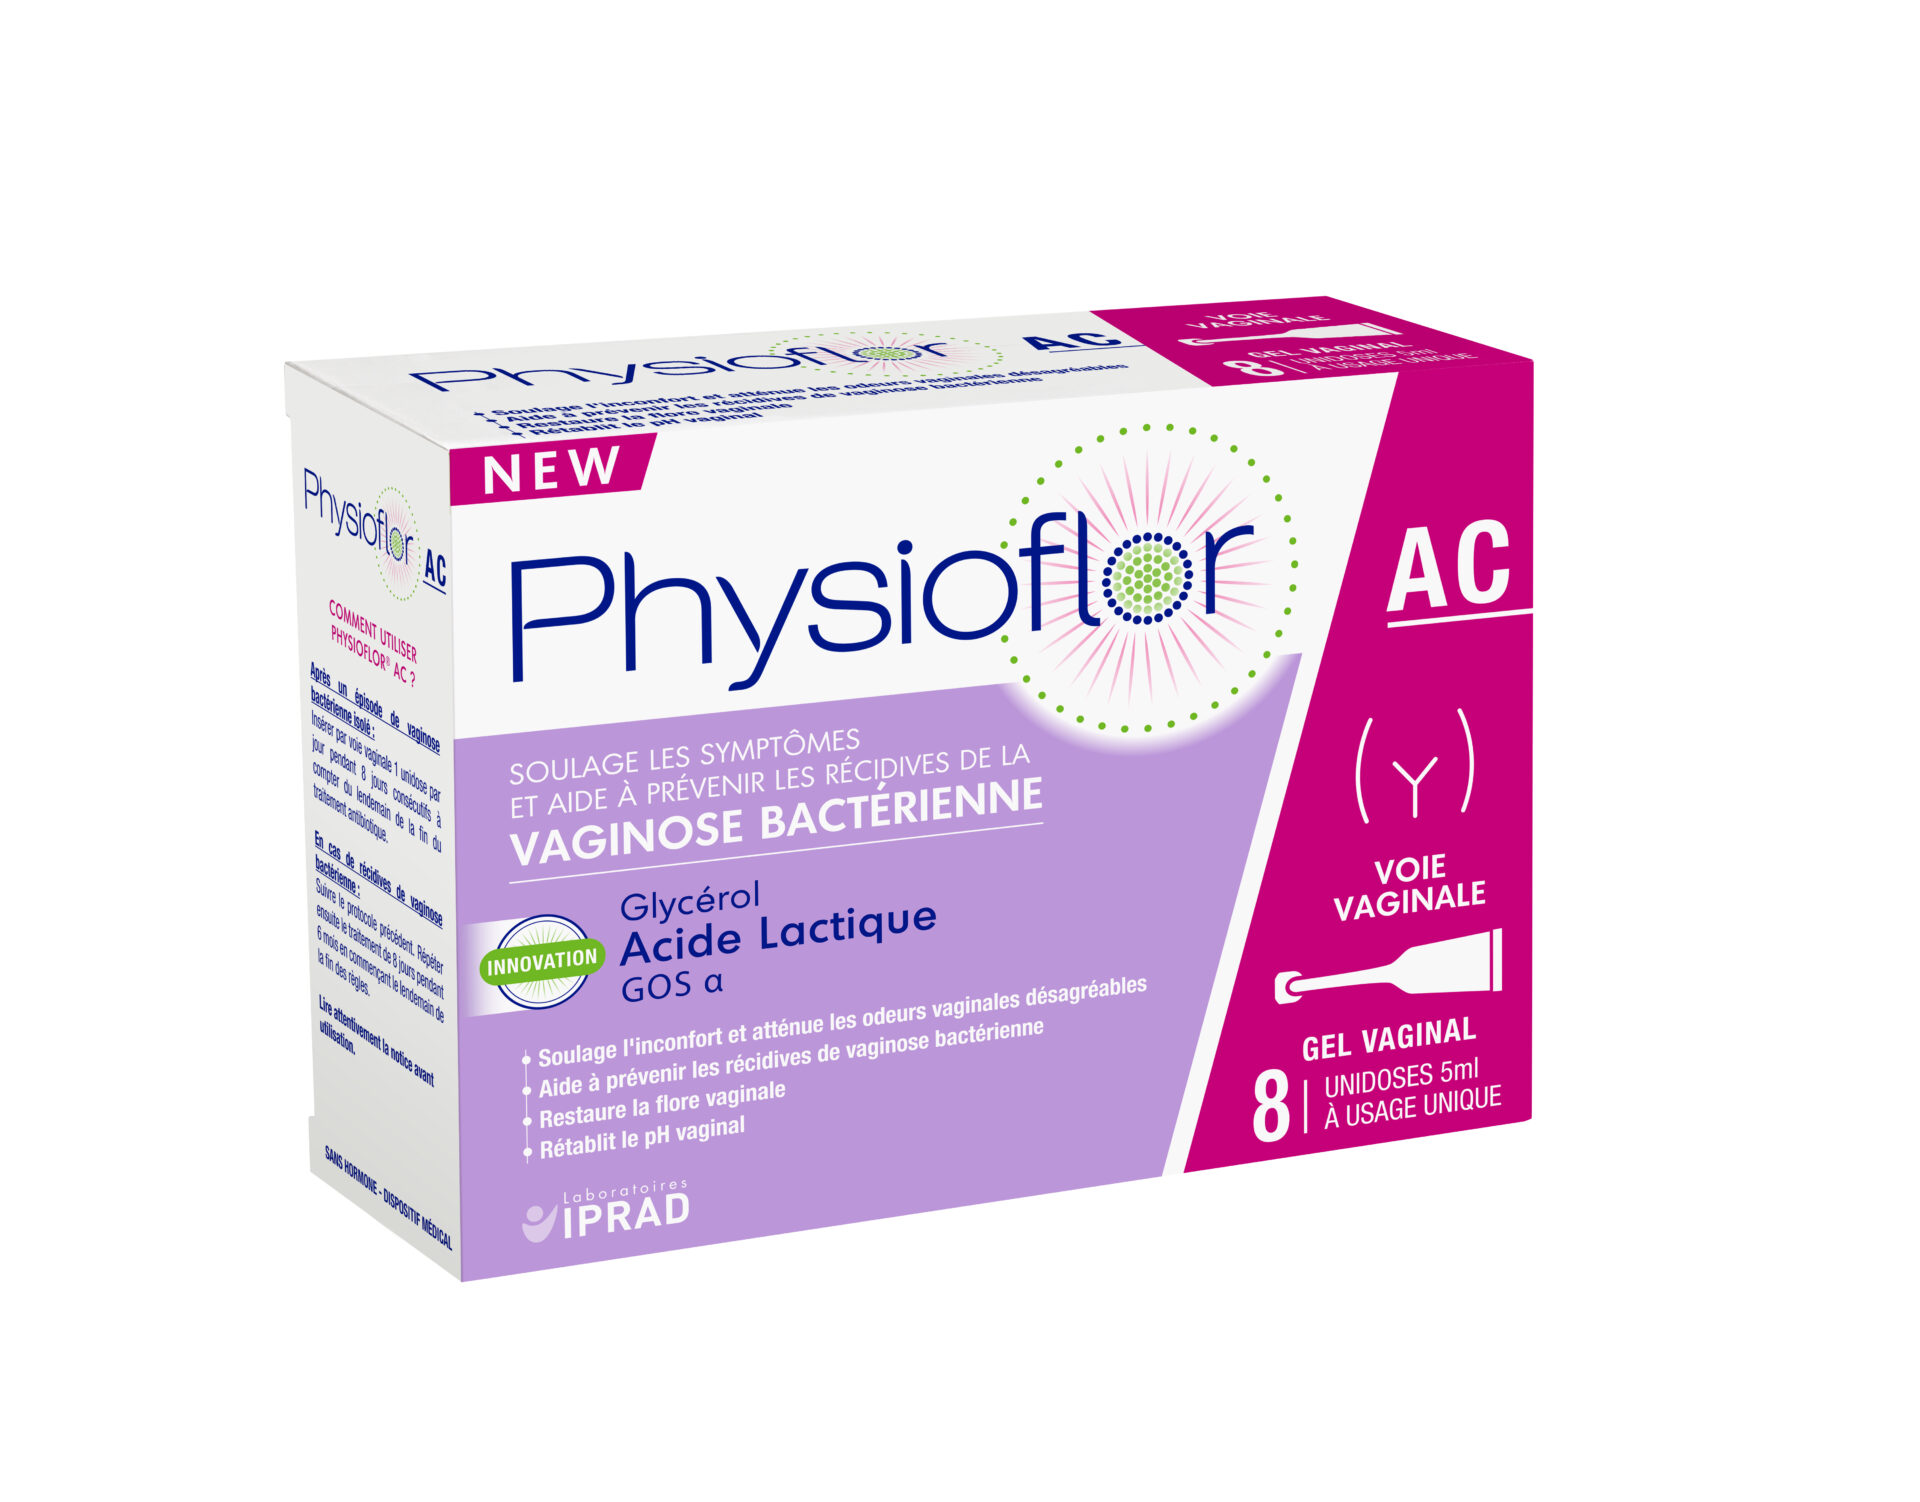 Physioflor gel vaginal 8 doses uniques